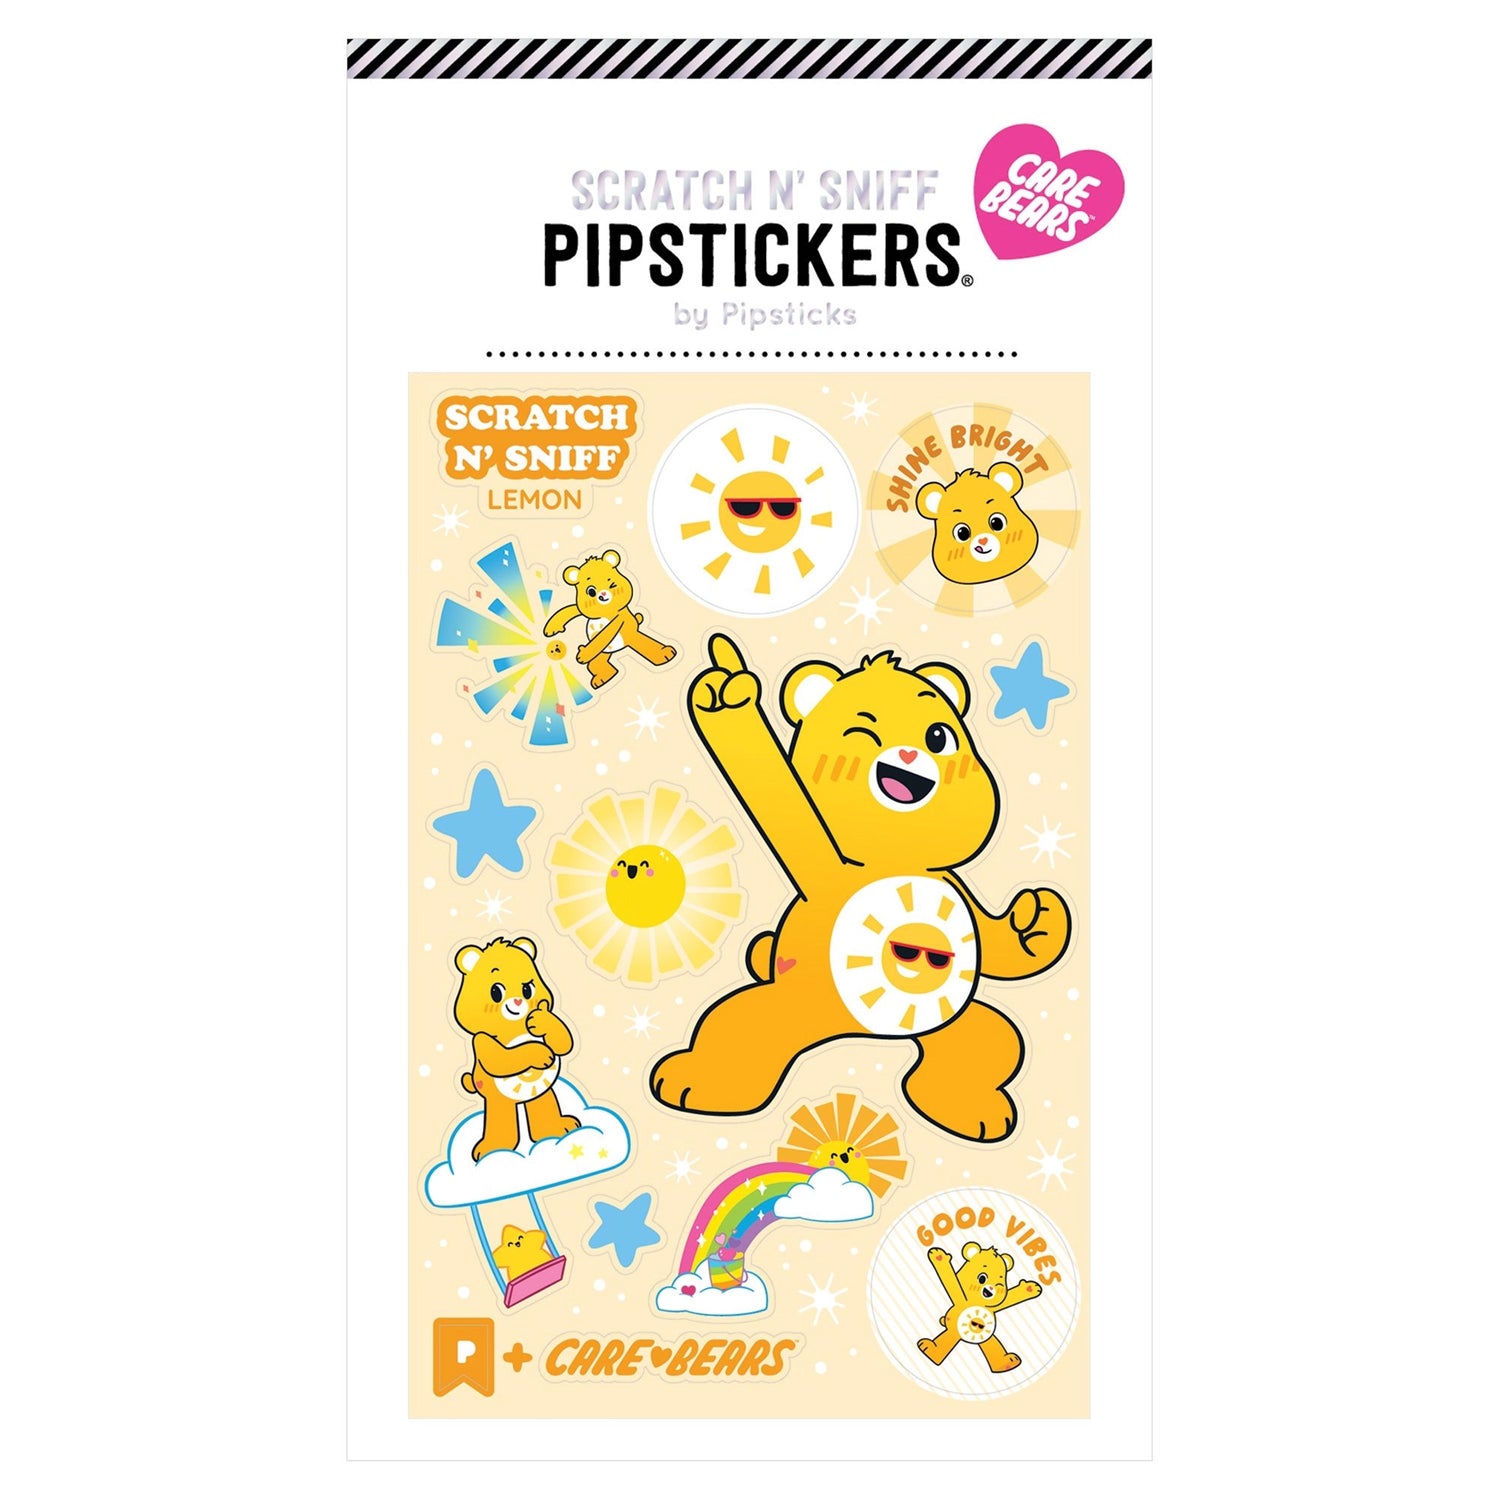 Eeyore Sticker Winnie the Pooh, Pooh Bear, Disney Stickers, Water